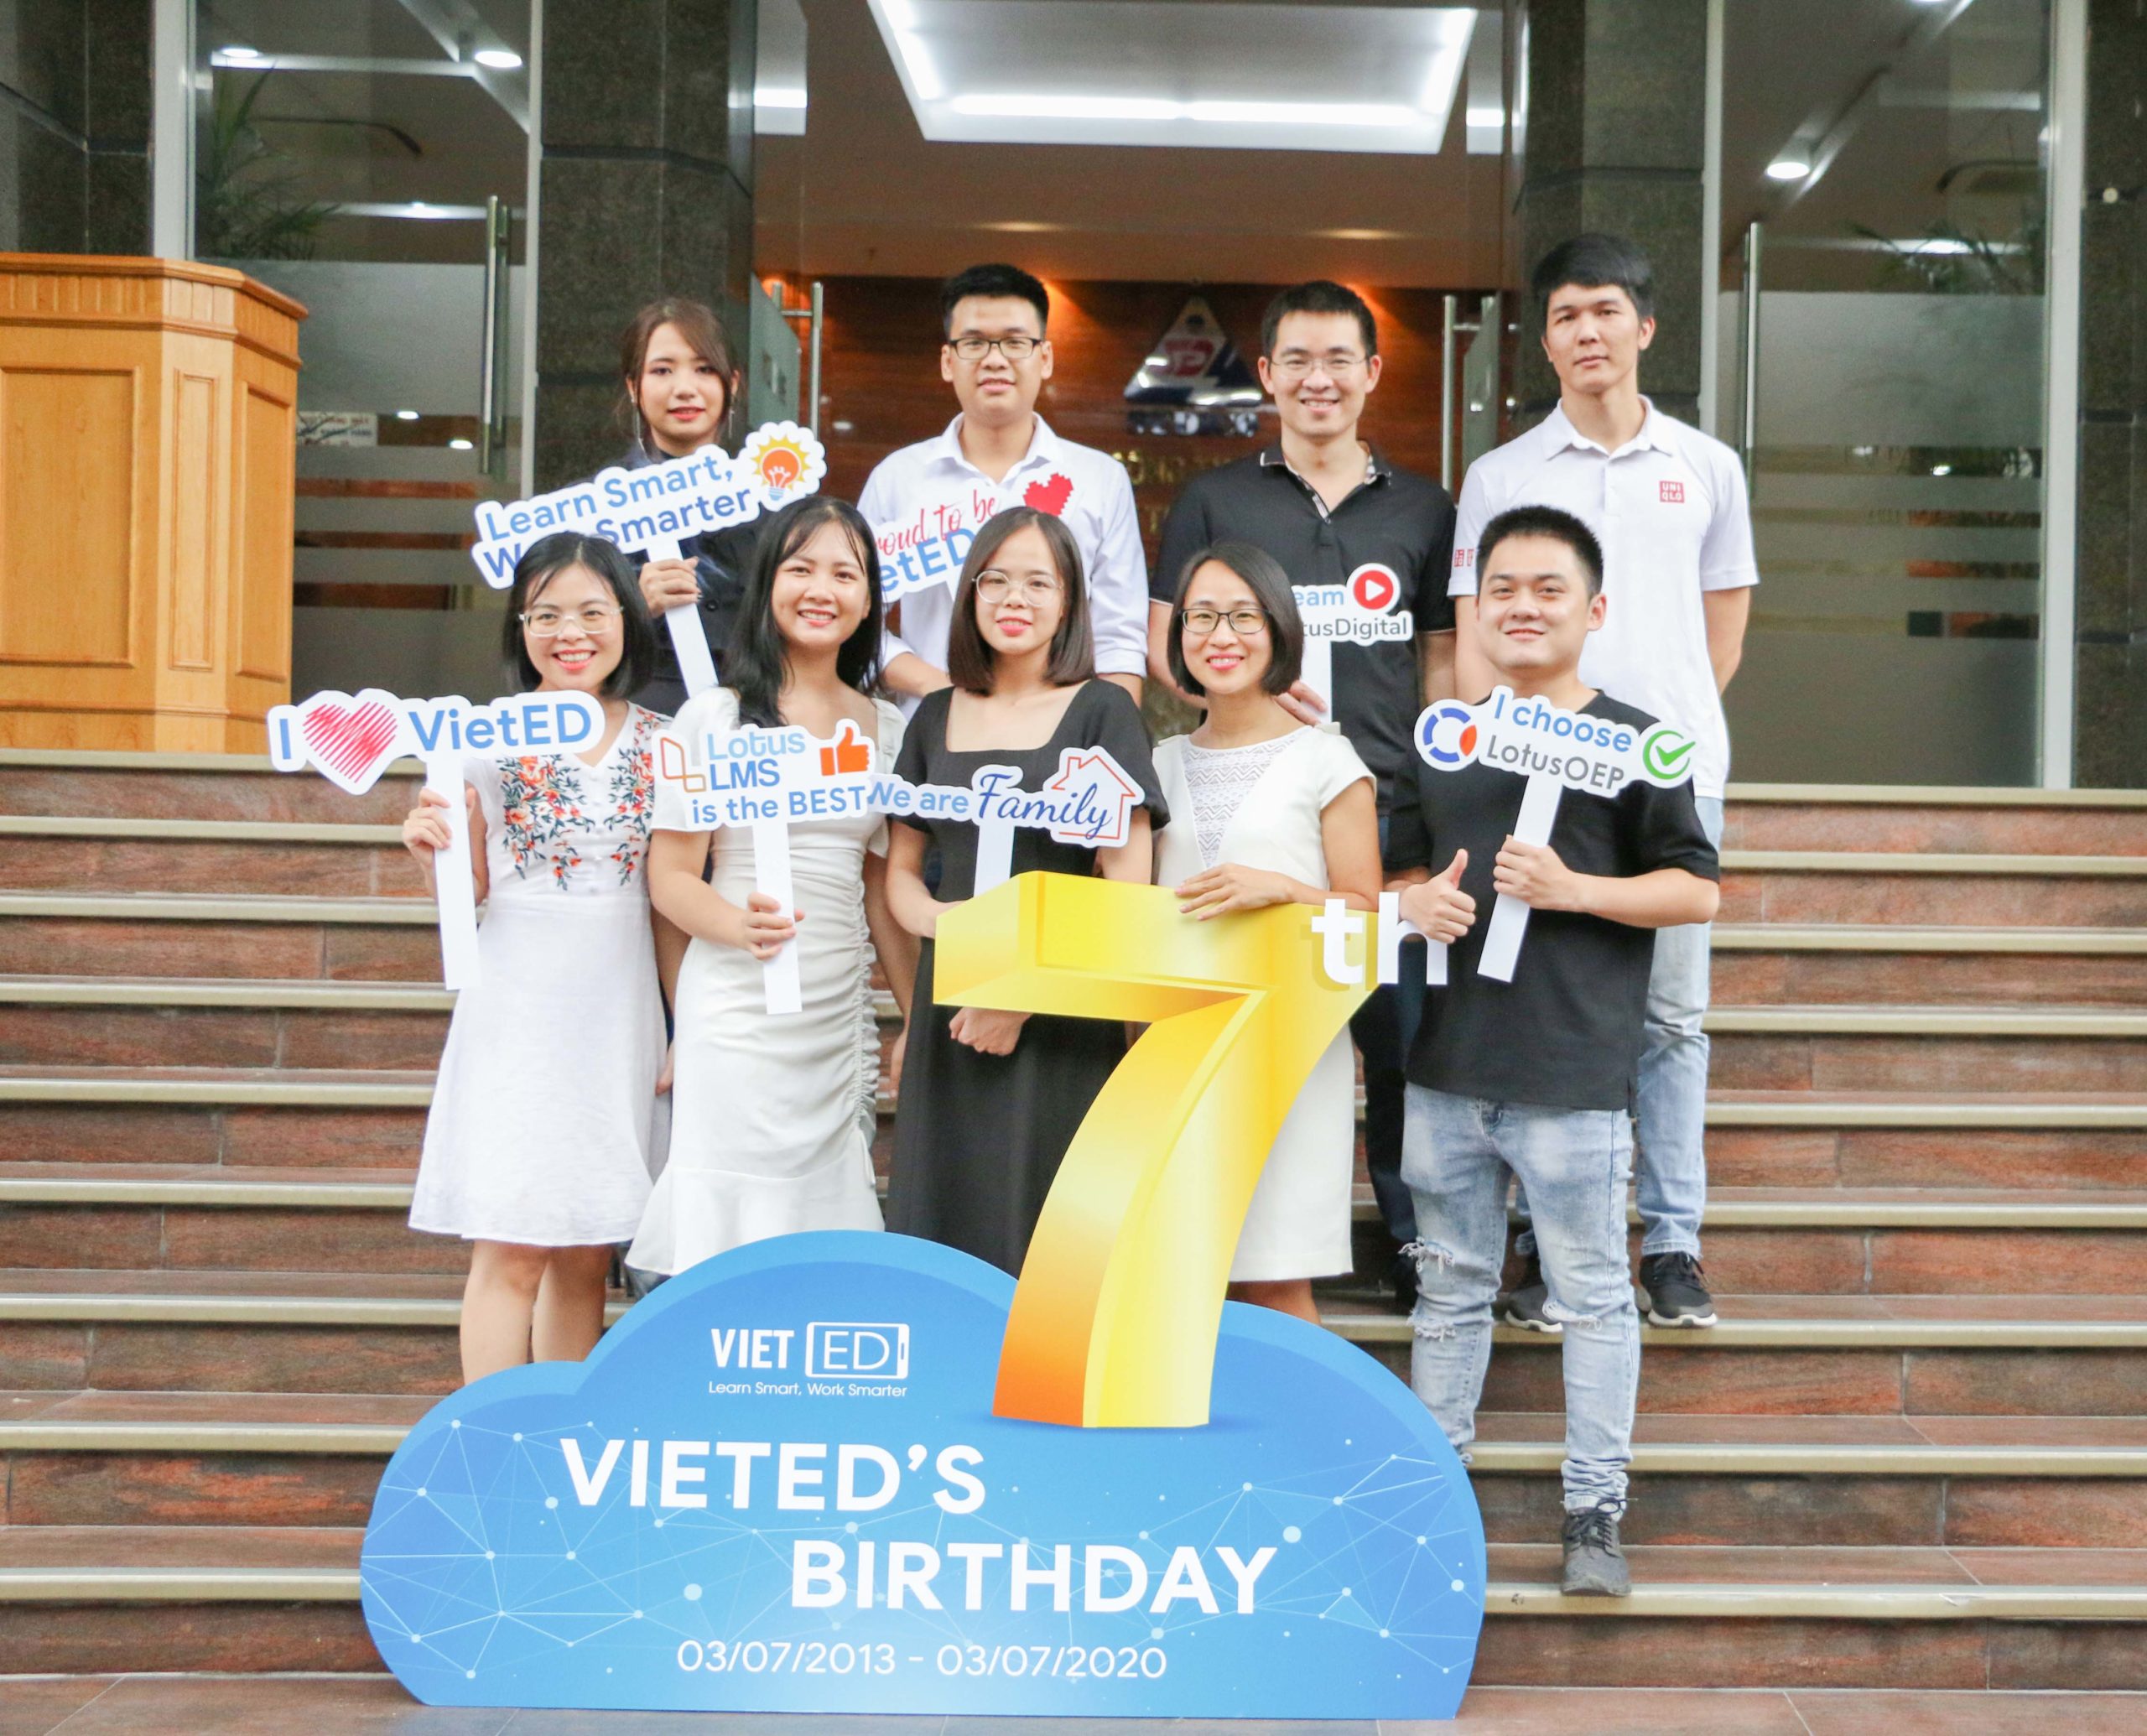 Team Ban tổ chức sinh nhật VietED